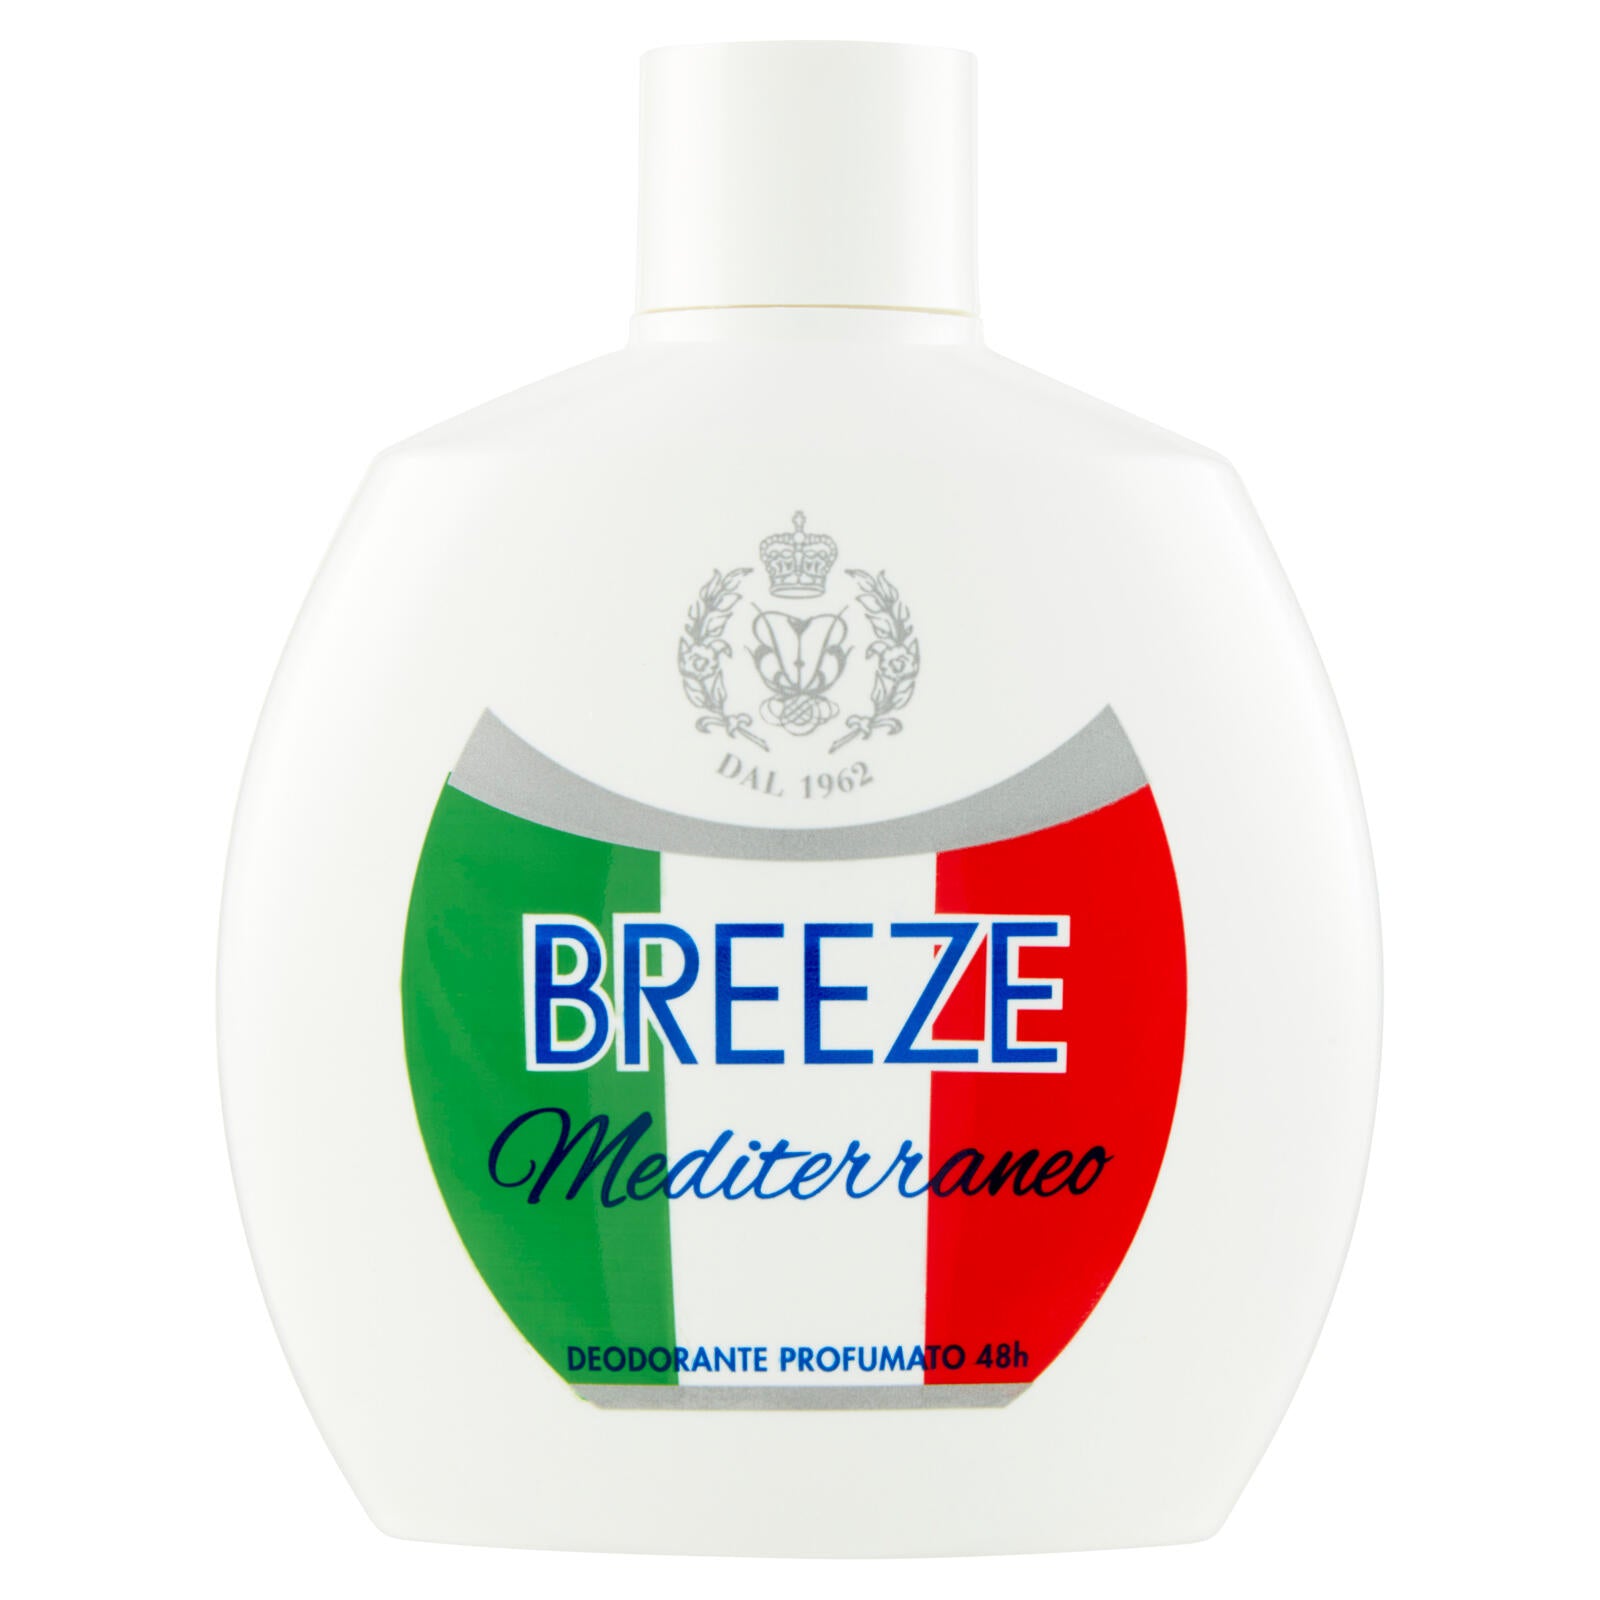 Breeze Mediterraneo Deodorante Profumato 48h 100 mL